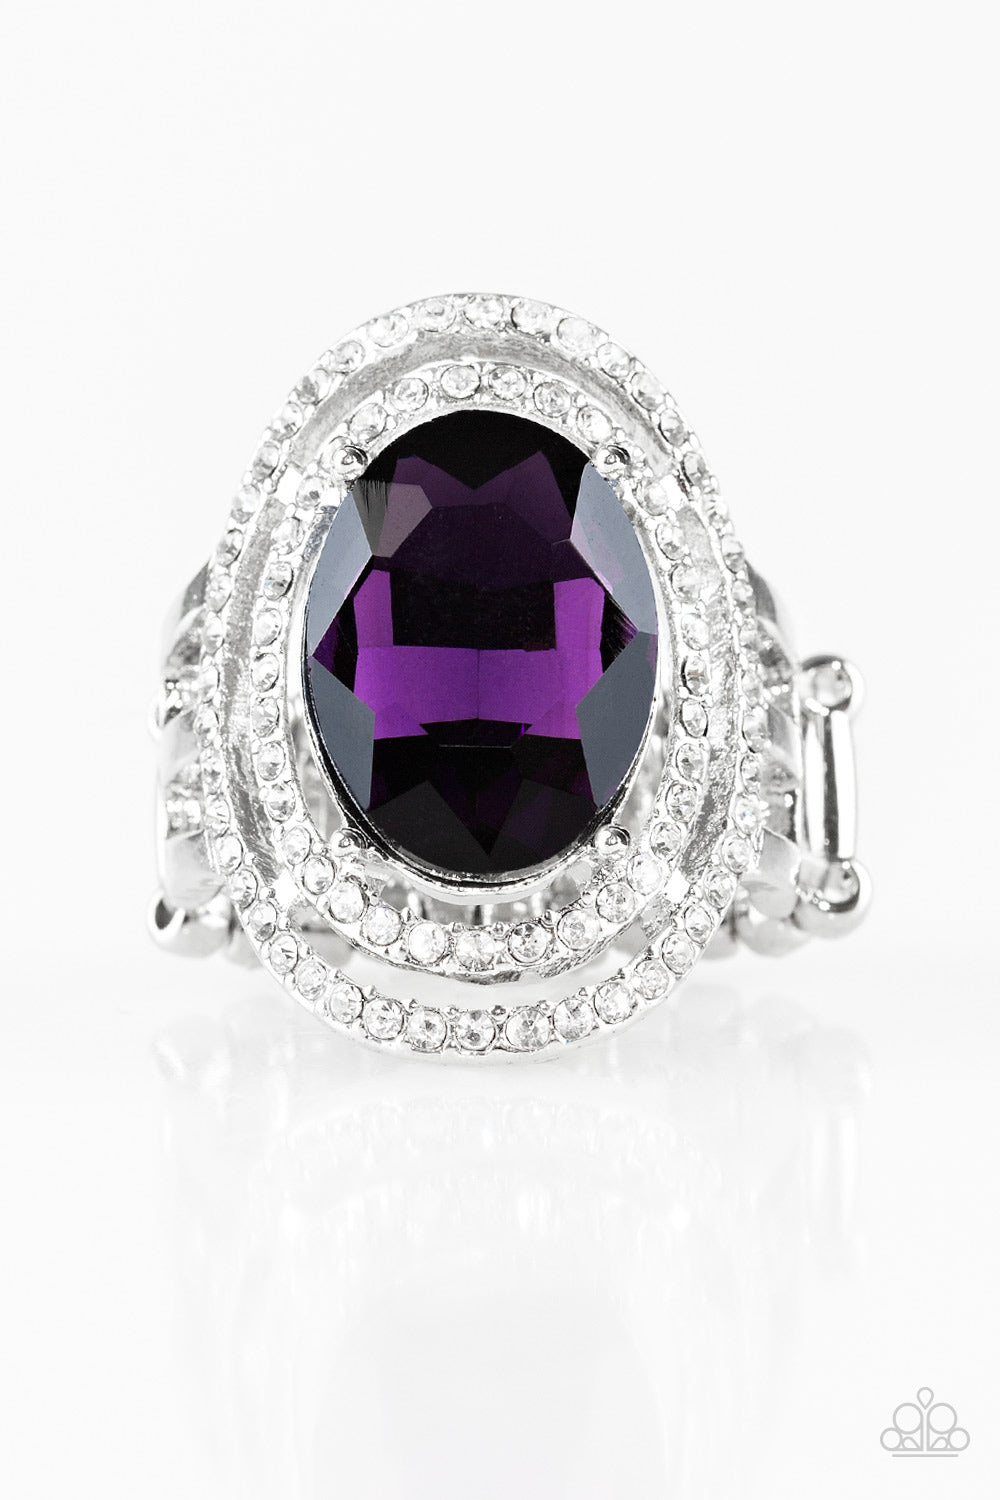 Paparazzi Making History - Purple Gem - White Rhinestones - Ring - $5 Jewelry With Ashley Swint